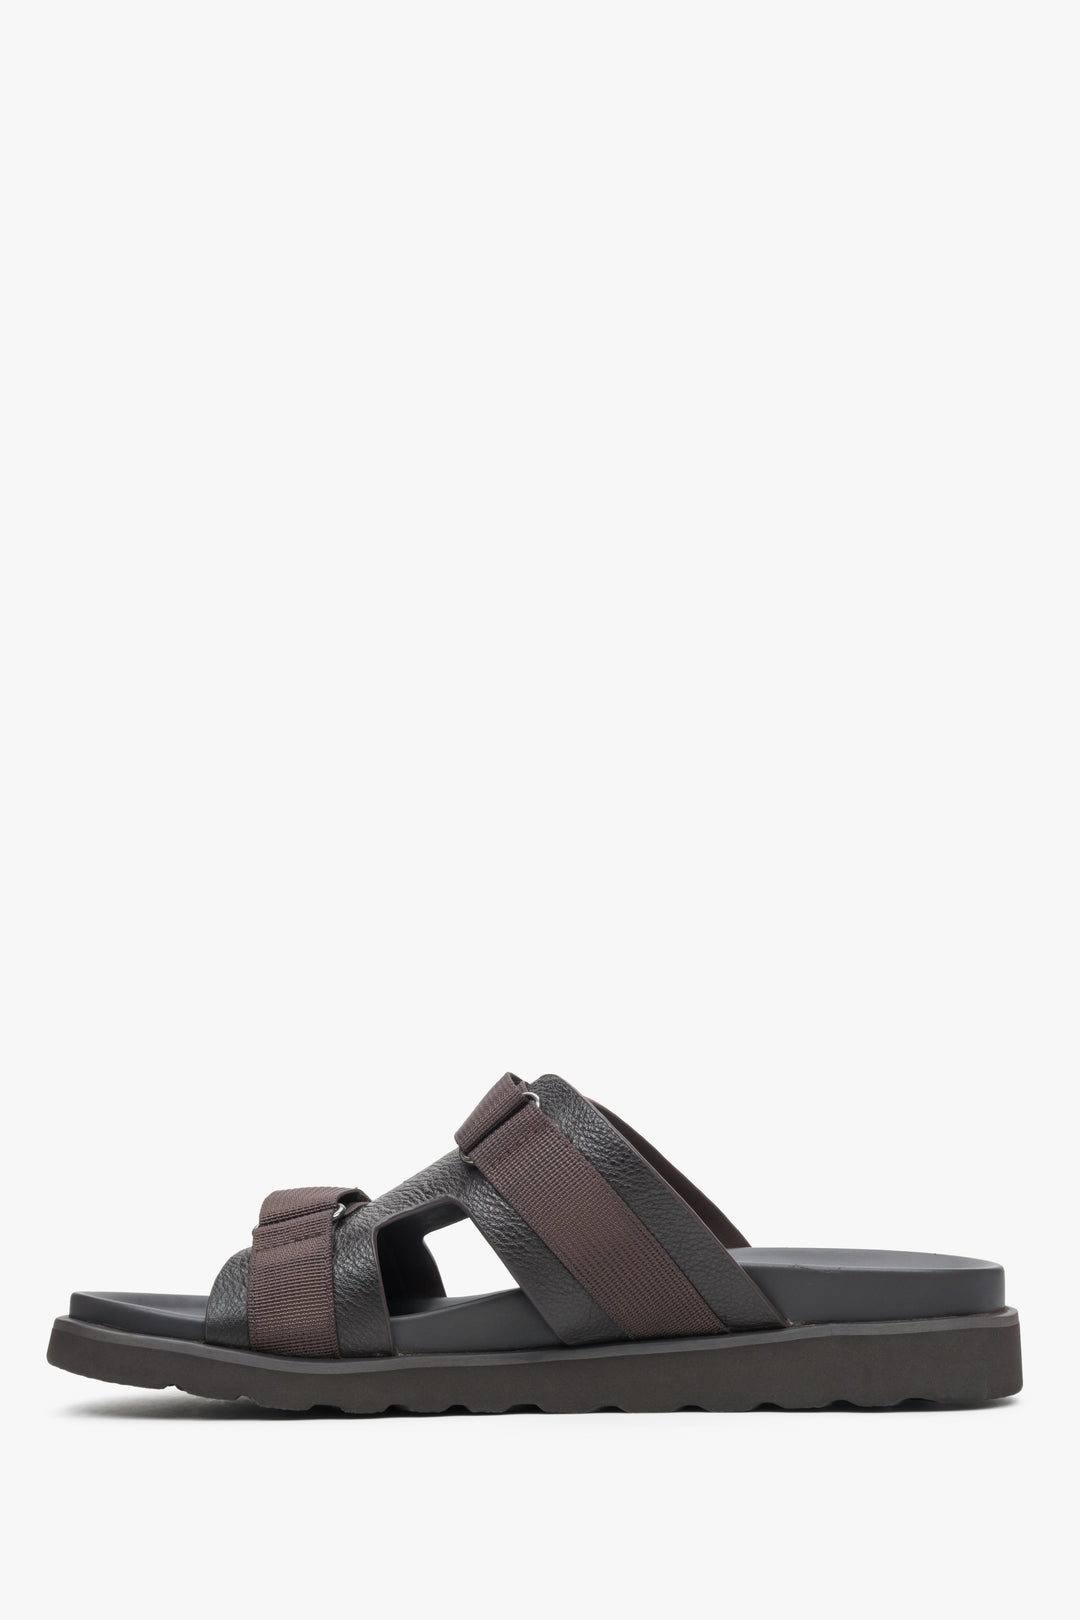 Leather, men's dark brown flip-flops with a flexible sole by Estro - shoe profile.